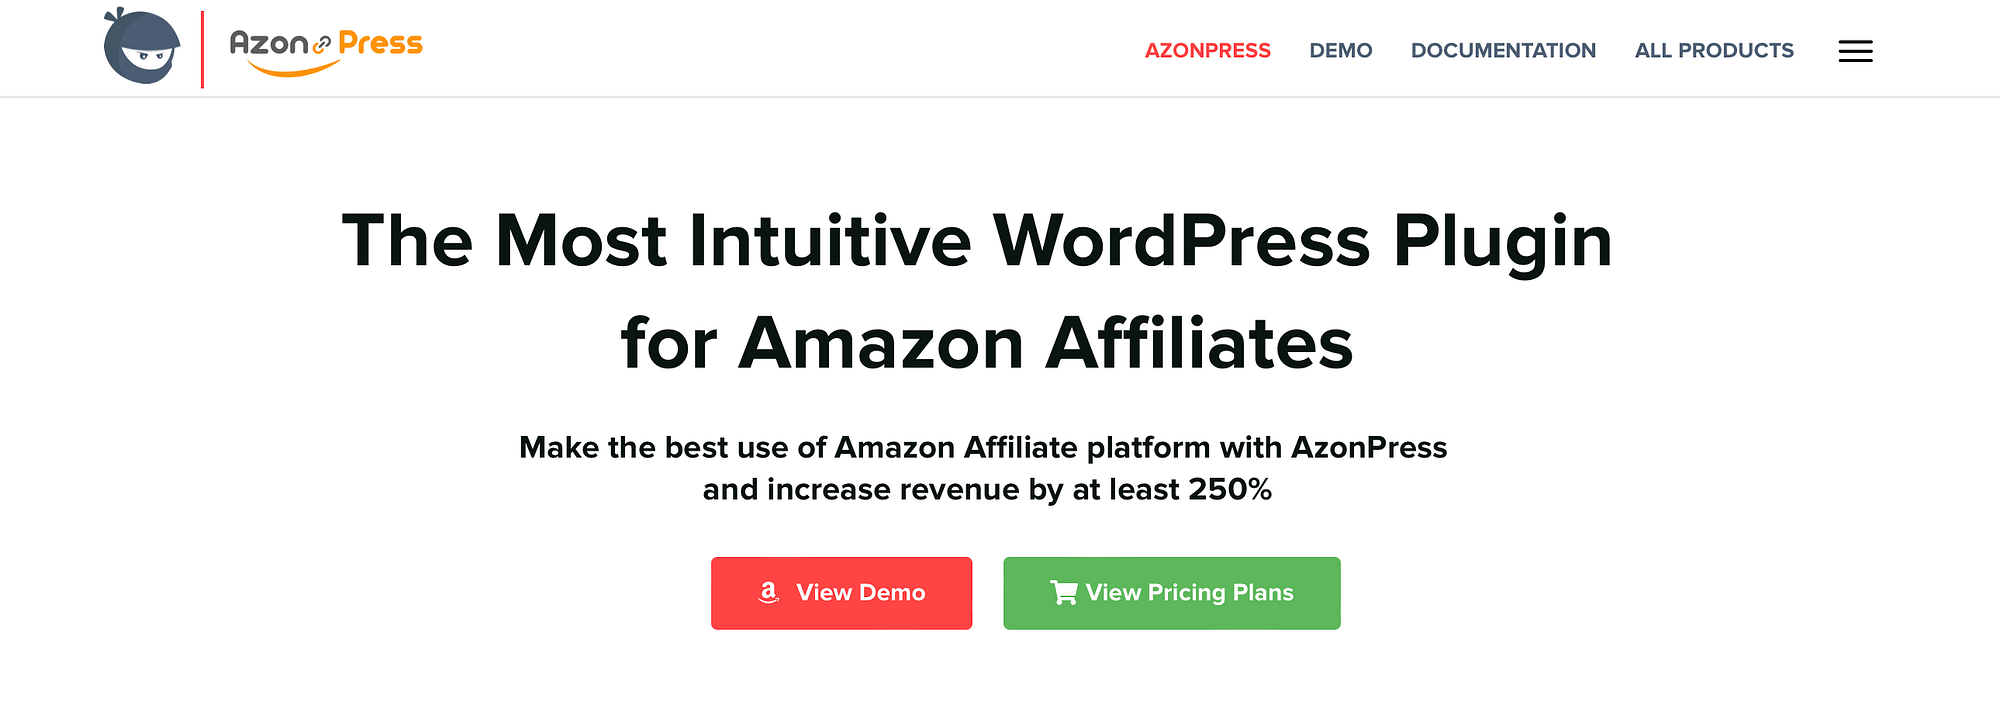 AzonPress is one of the best Amazon affiliate WordPress plugins.